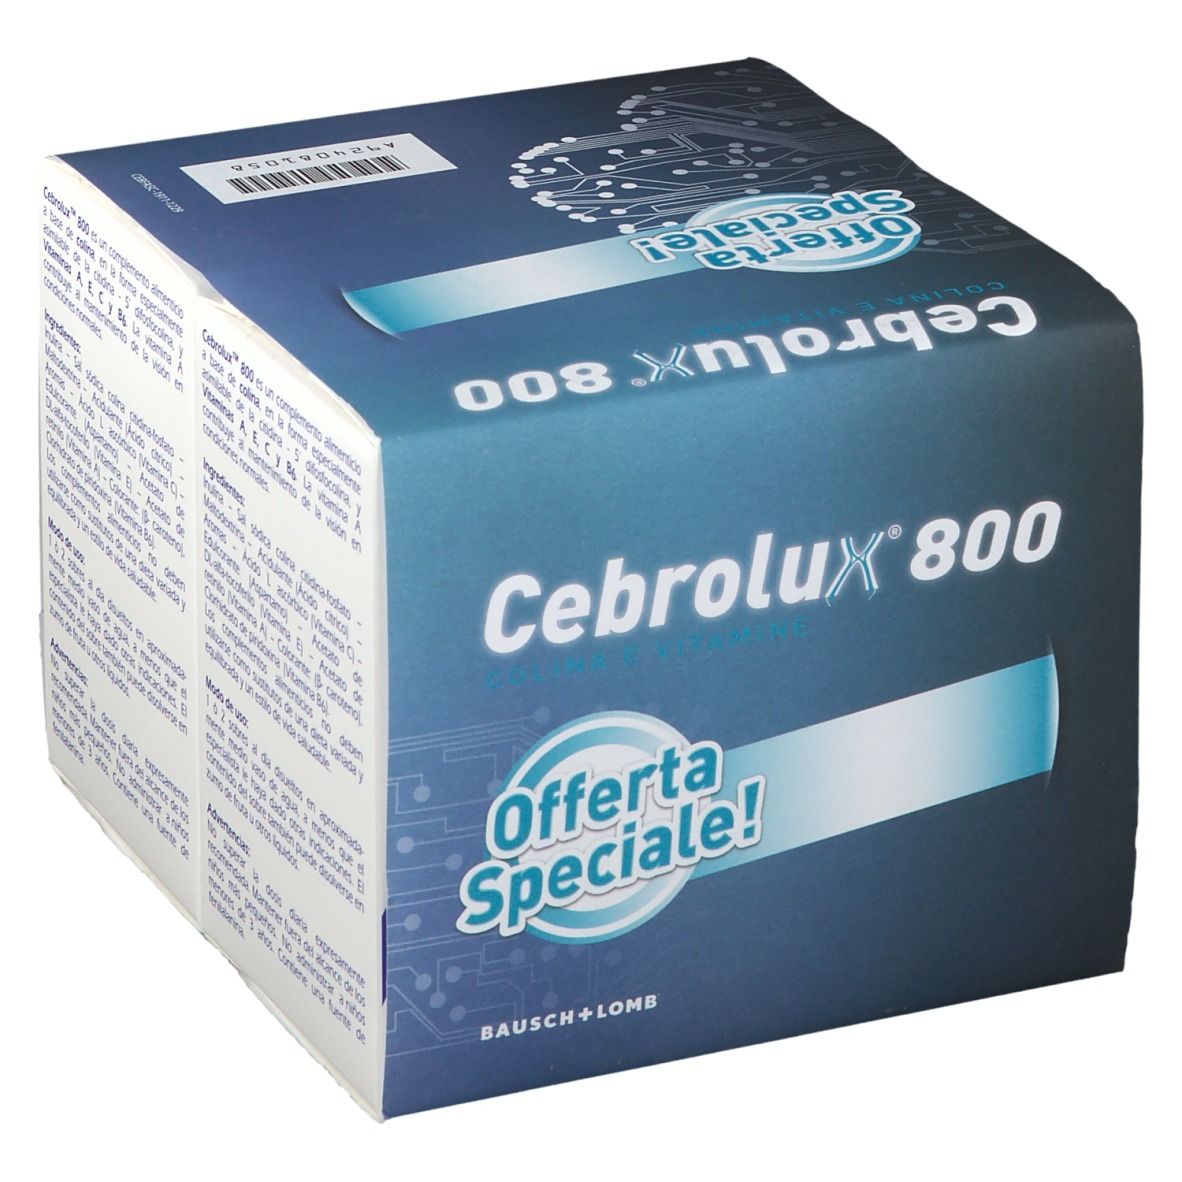 Cerebrolux® 800 Duo Pack